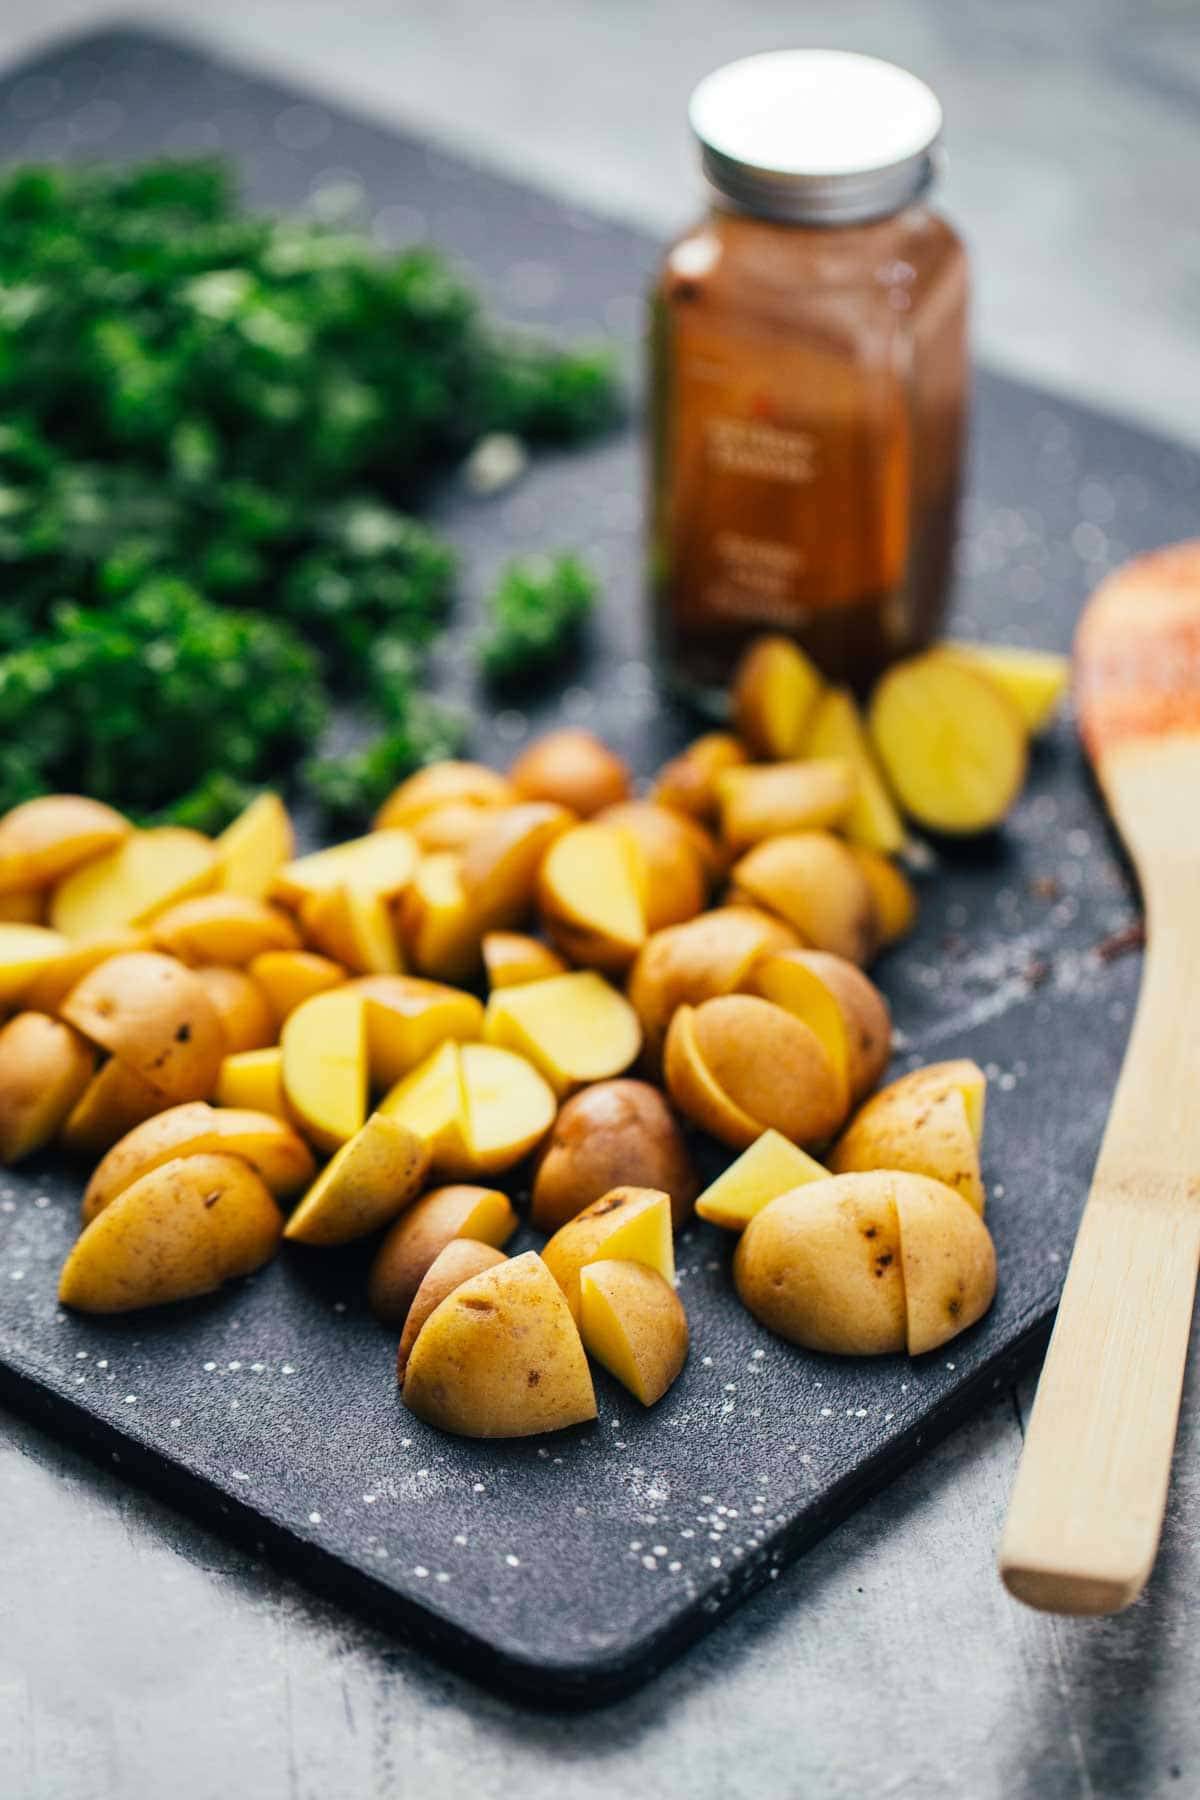 Potatoes on a cutting board.